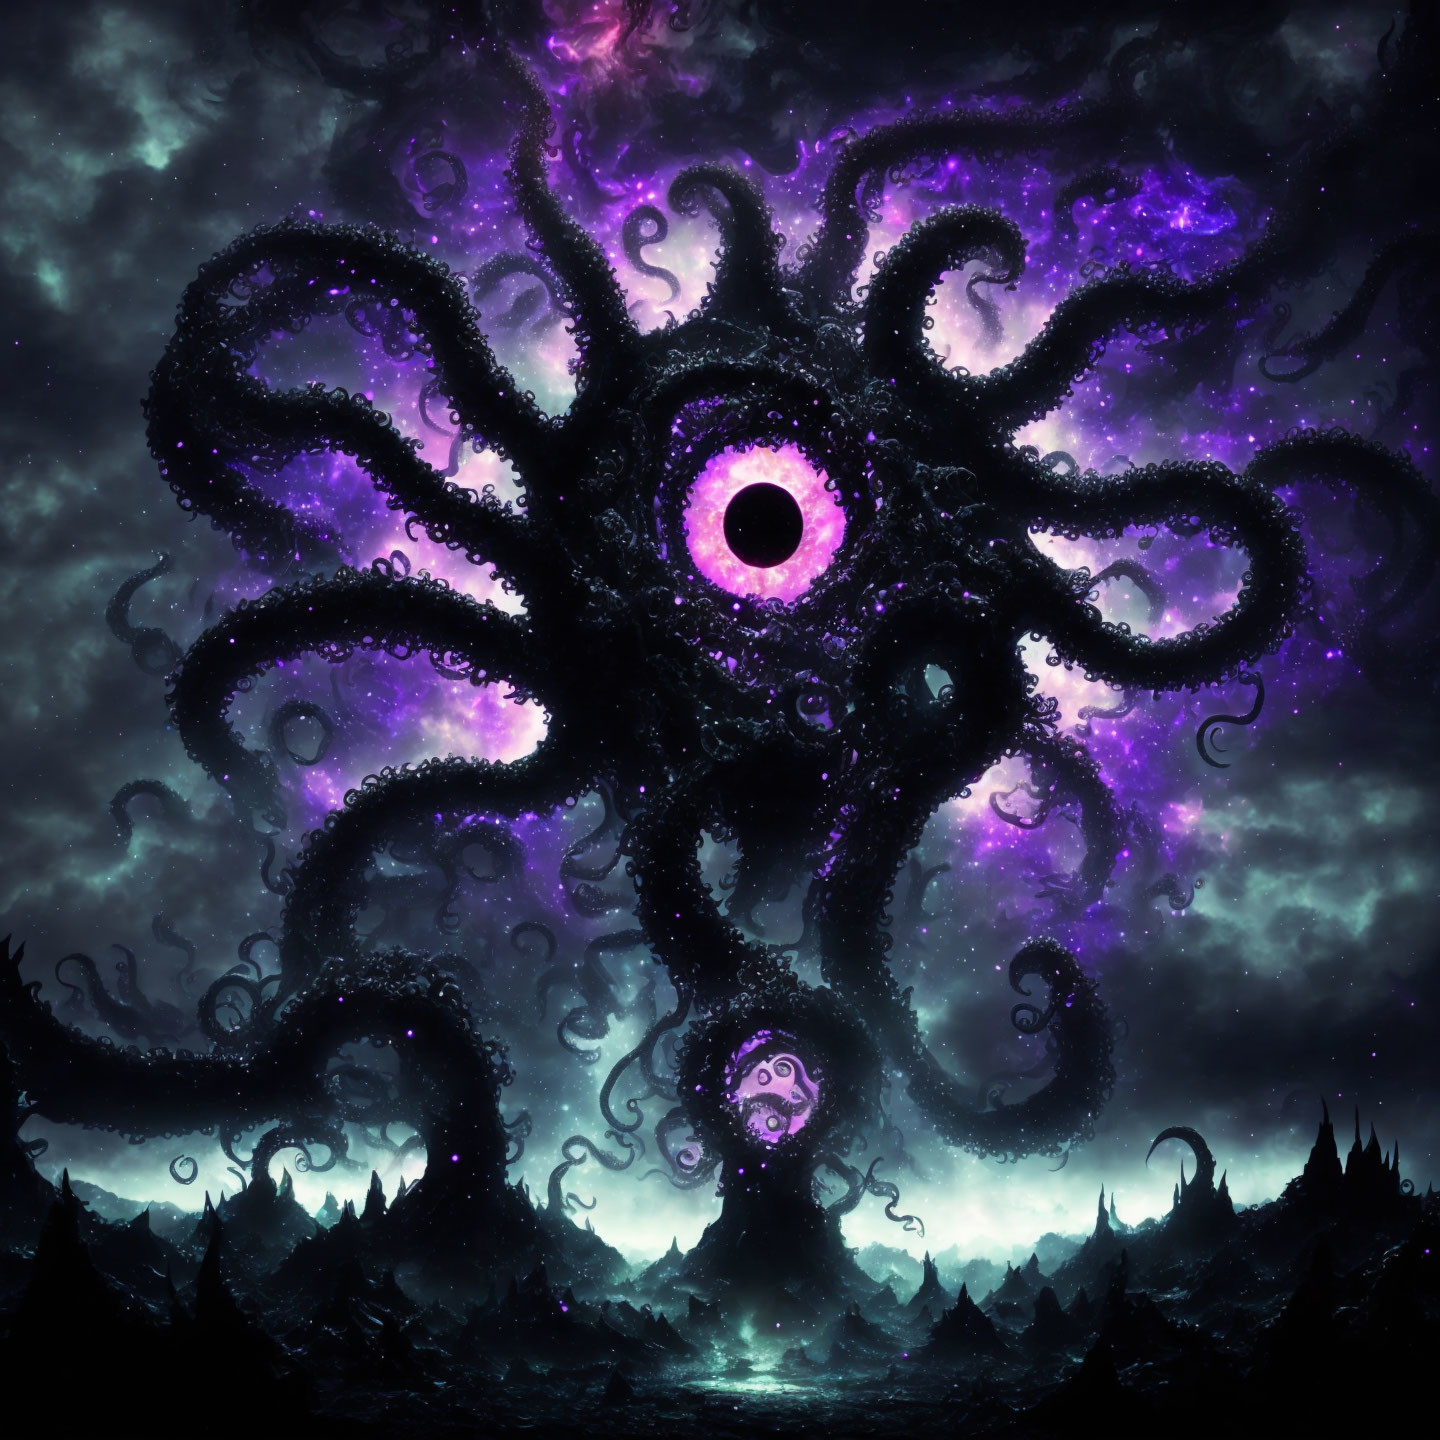 Eldritch space tentacle monster